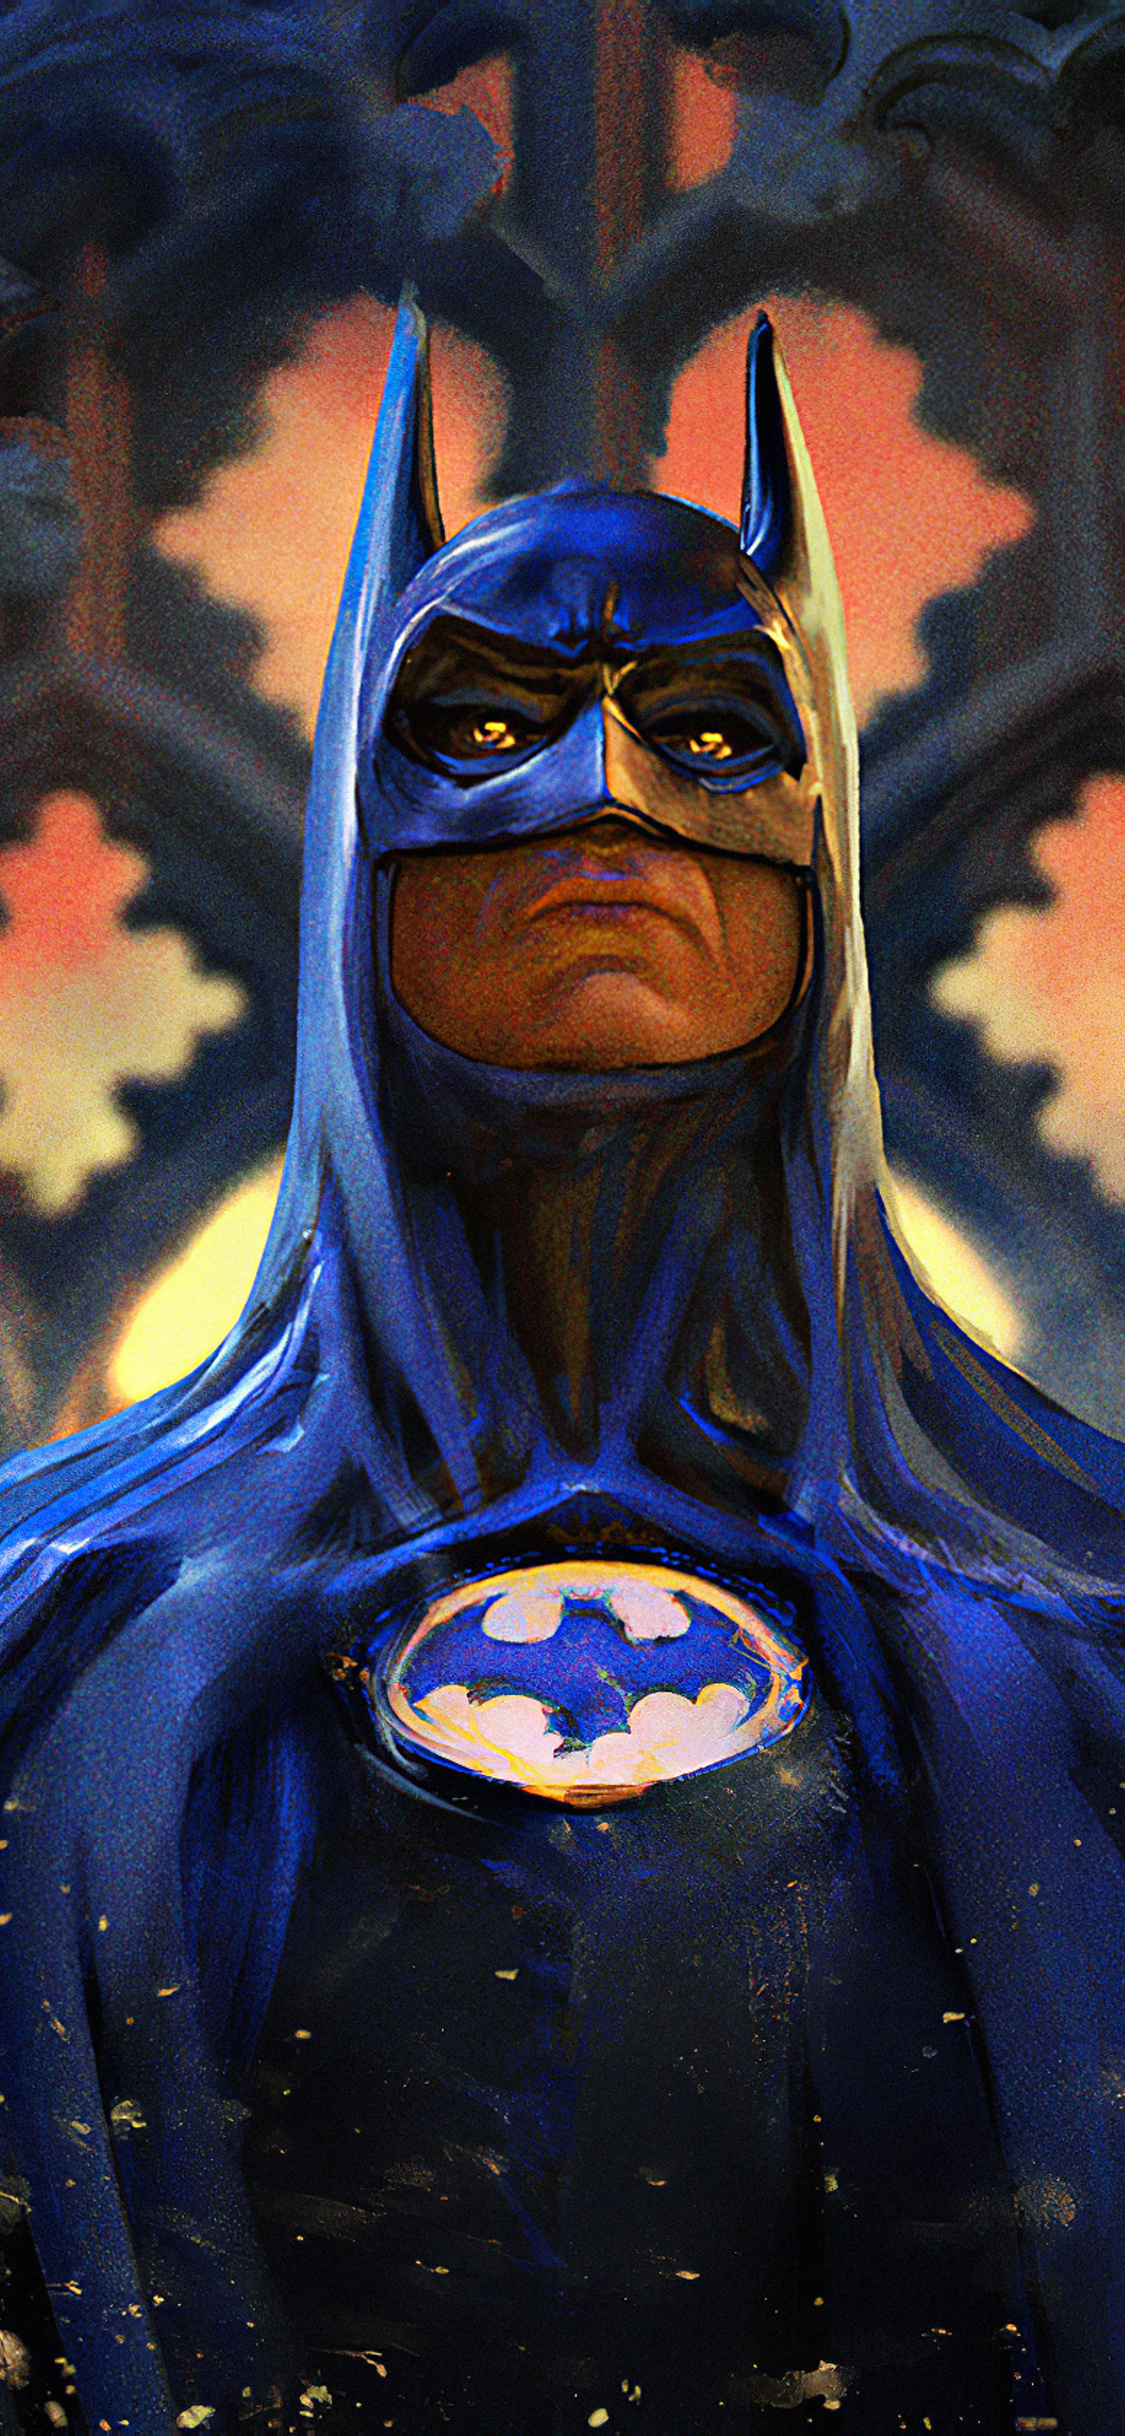 Batman Michael Keaton Art iPhone XS, iPhone iPhone X HD 4k Wallpaper, Image, Background, Photo and Picture